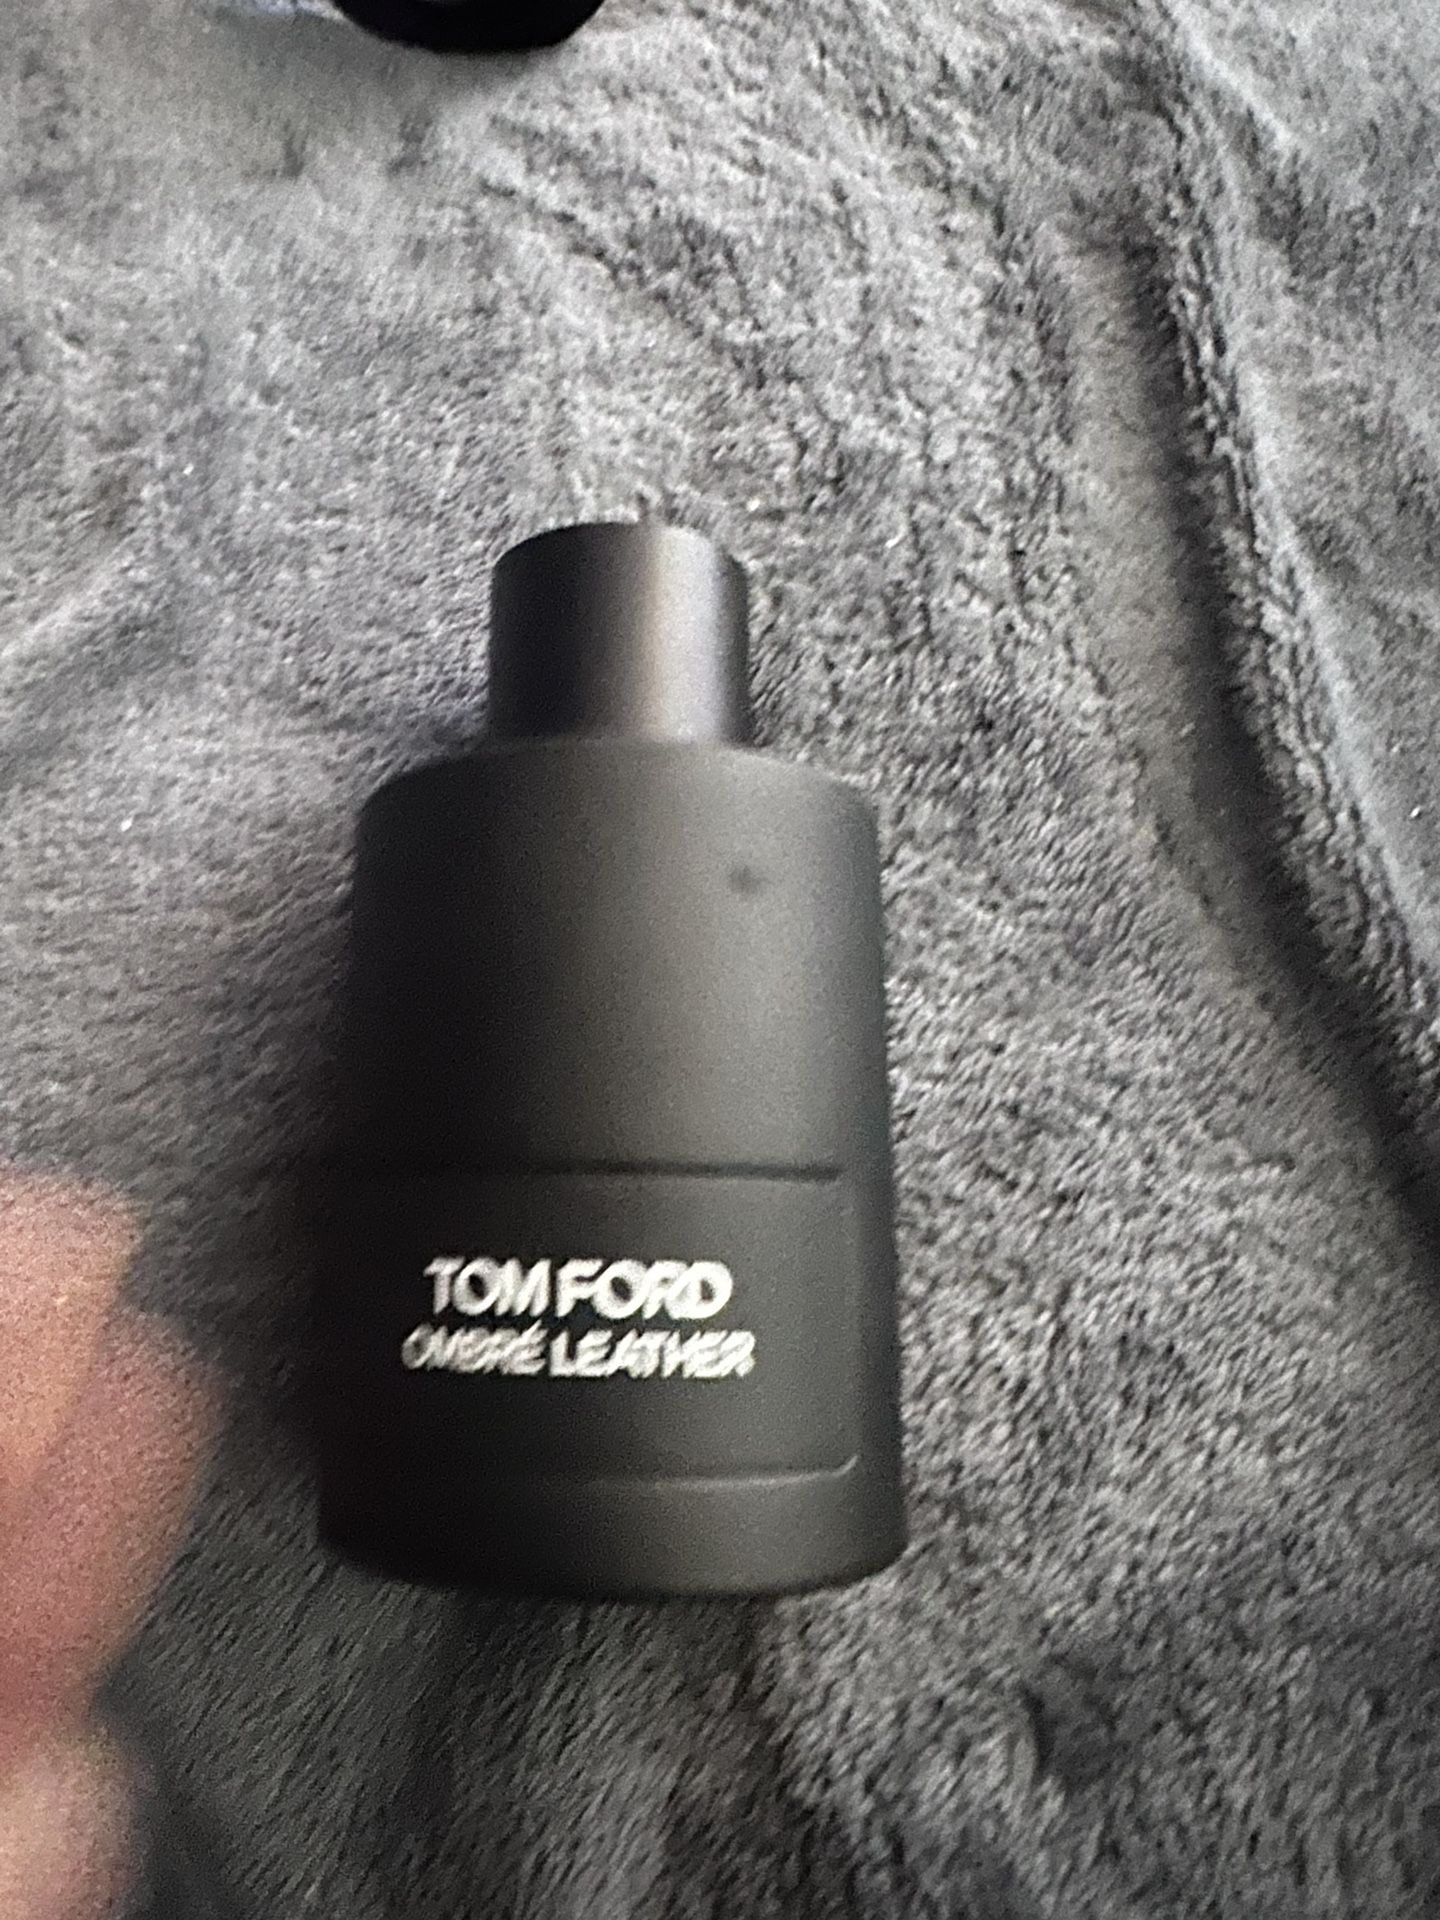 Tom Ford Ombré Leather 3.4oz